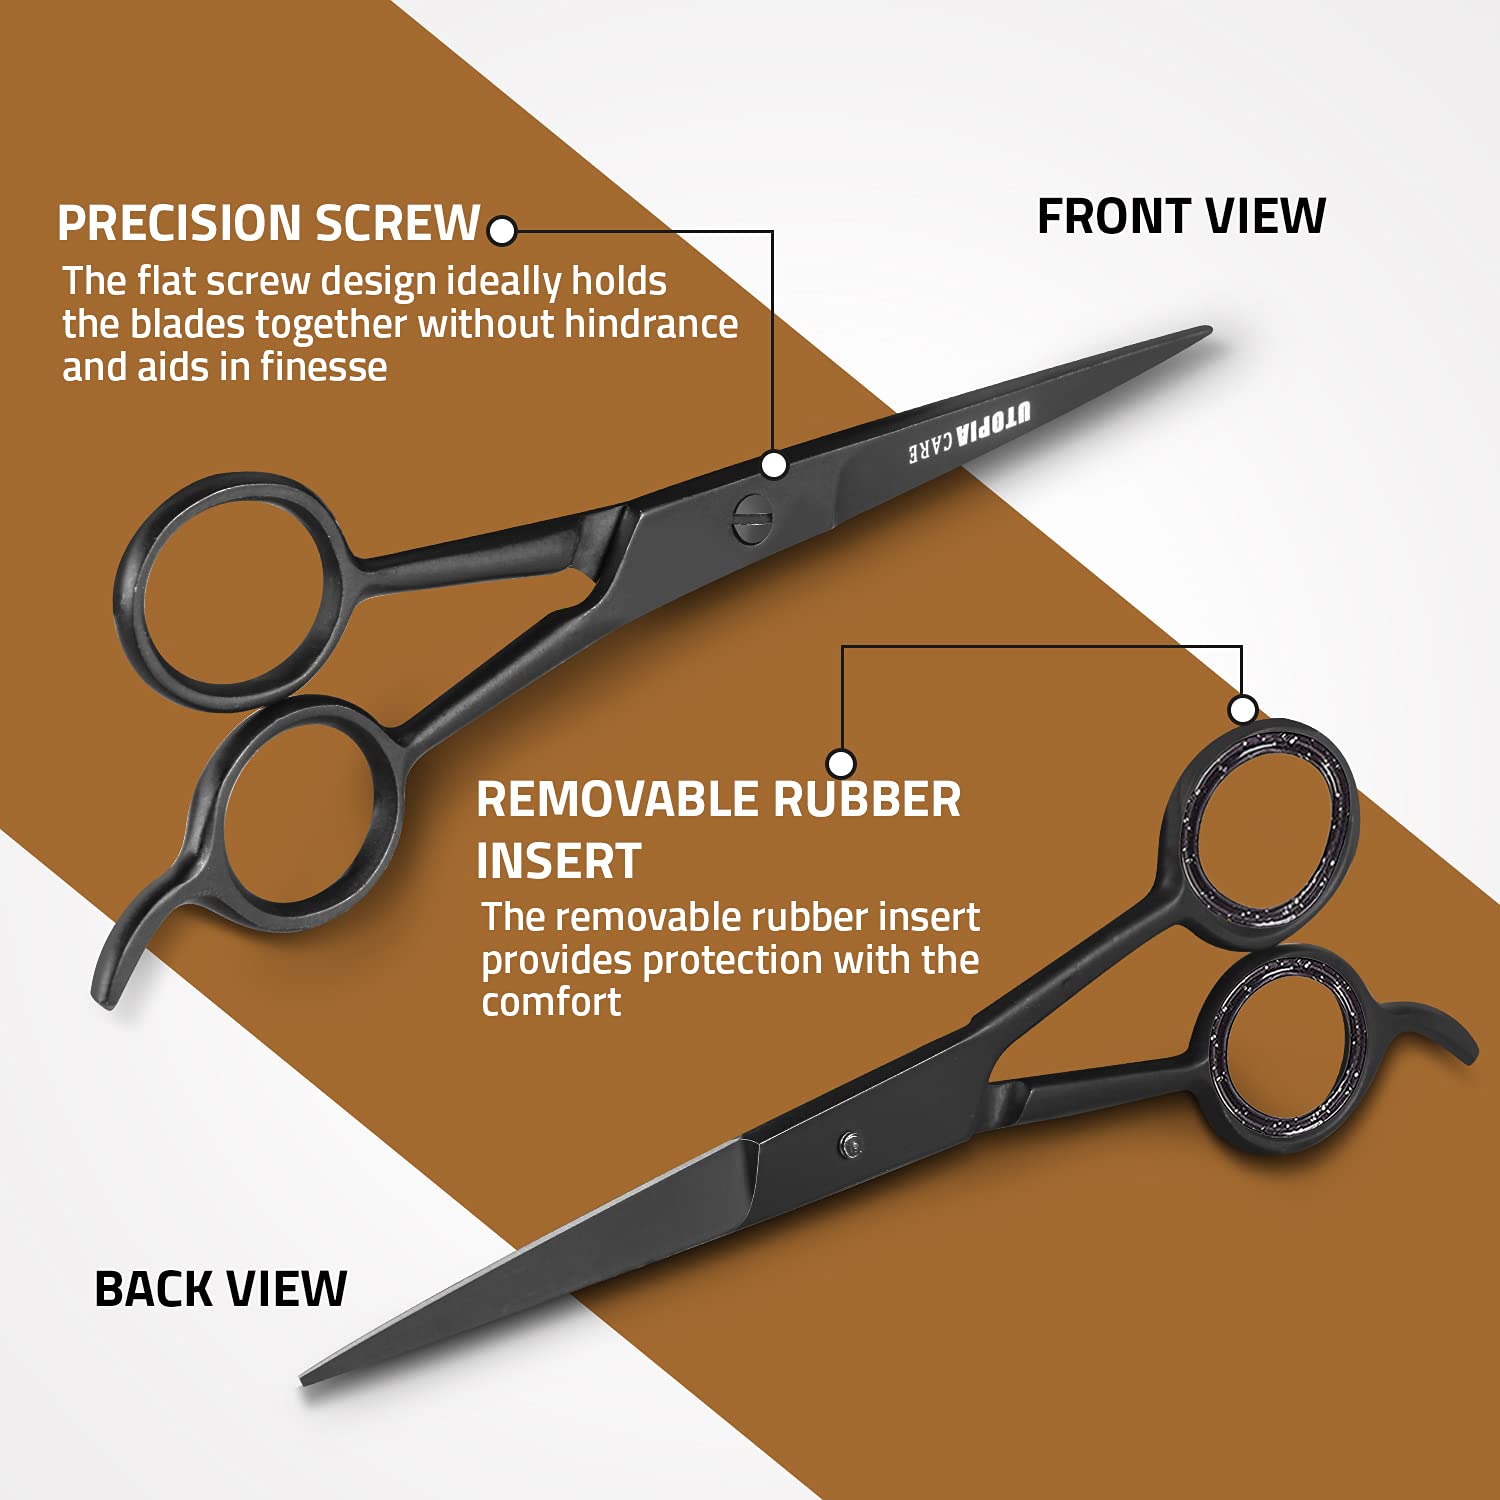 EAGLE SHARP professional cutting scissors C01-6030W